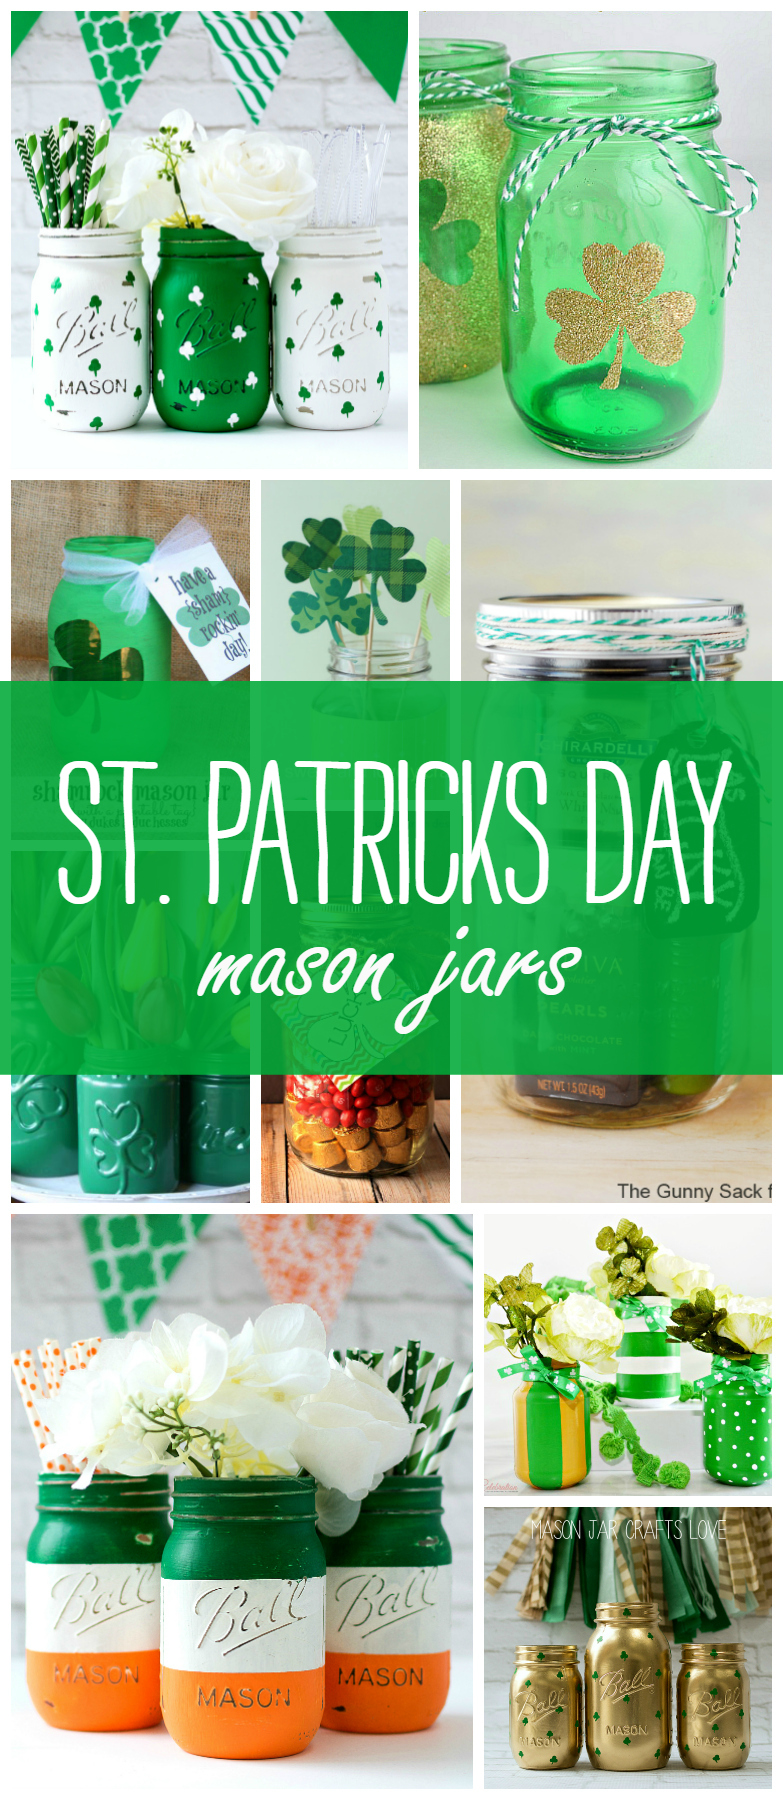 St. Patrick's Day Craft, Recipe, Gift Ideas in Mason Jars